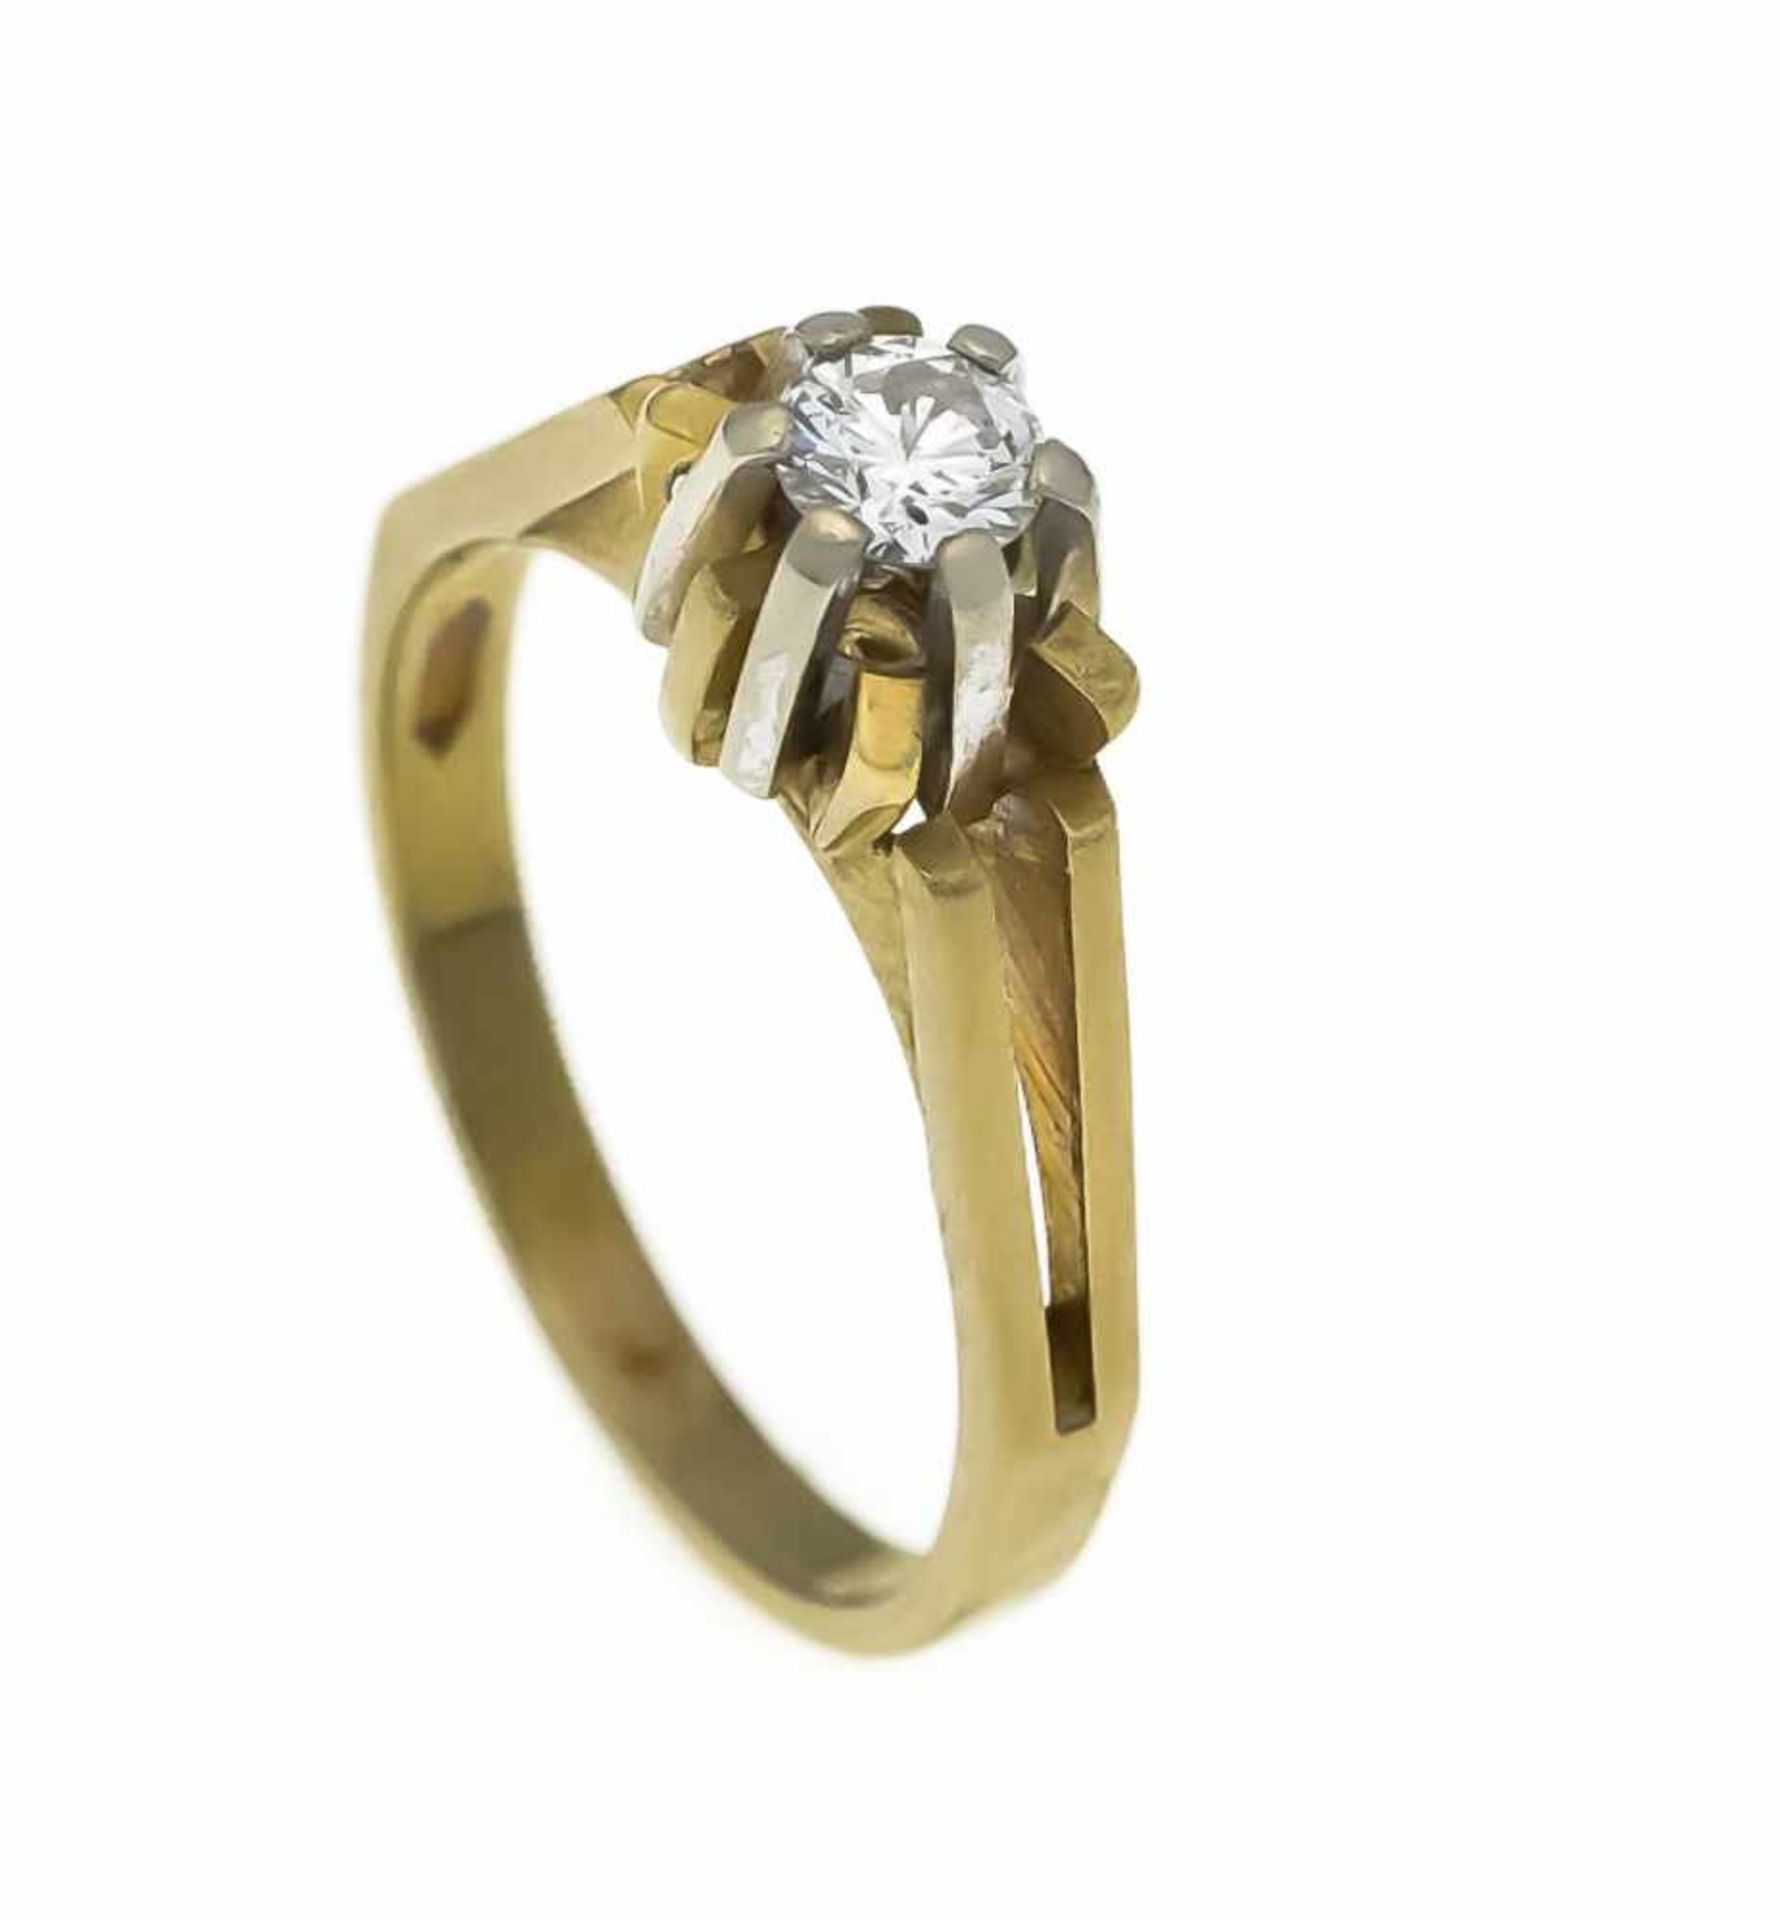 Brillant-Ring GG/WG 585/000 mit einem Brillanten 0,25 ct W/PI1, RG 53, 3,6 gBrillant ring GG / WG